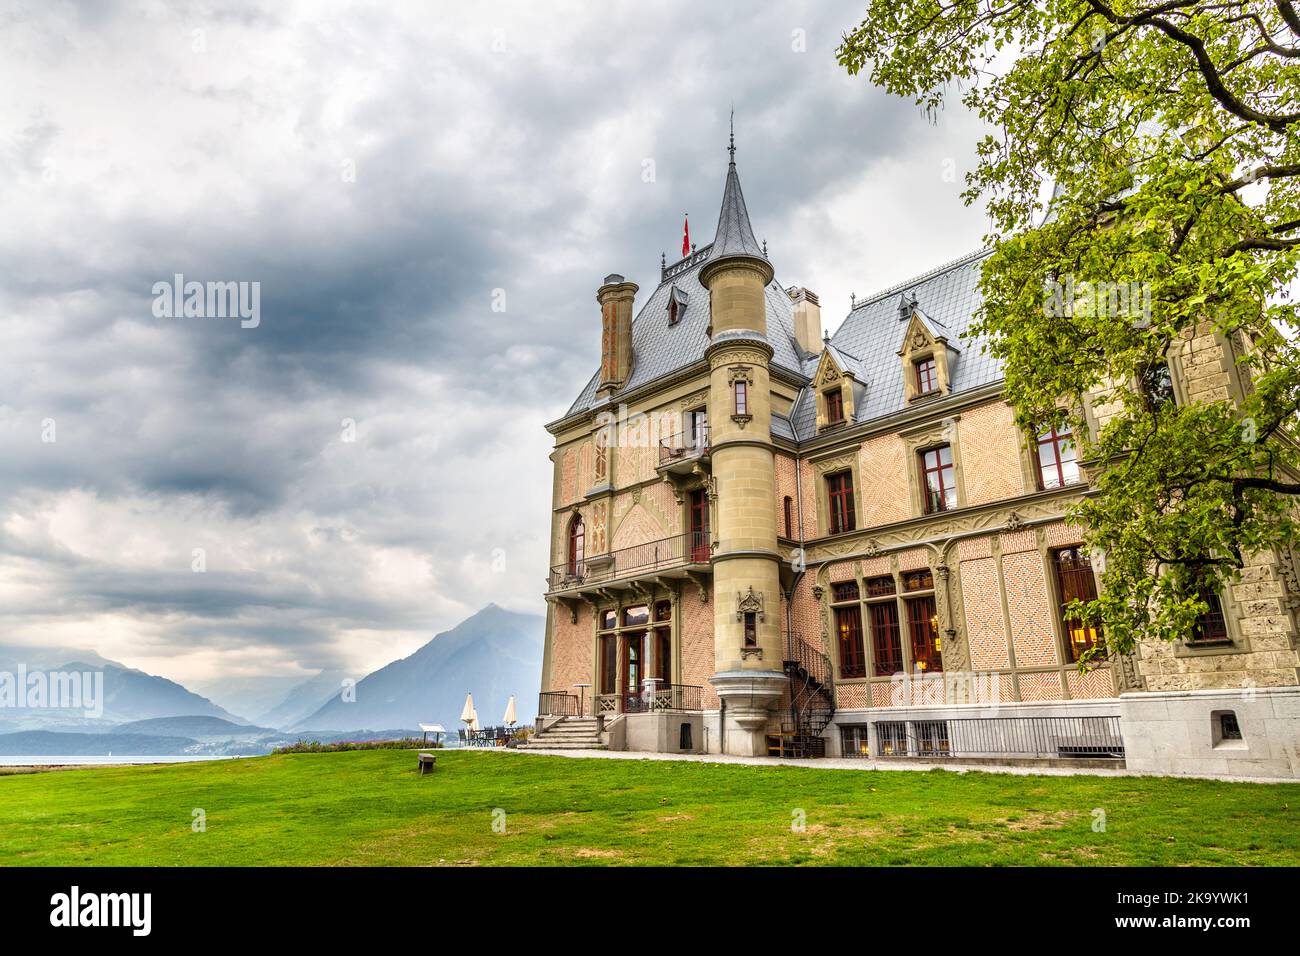 19th century Gothic Revival style Schadau Castle in Schadau Park overlooking Lake Thun and the Alps, Thun, Switzerland Stock Photo